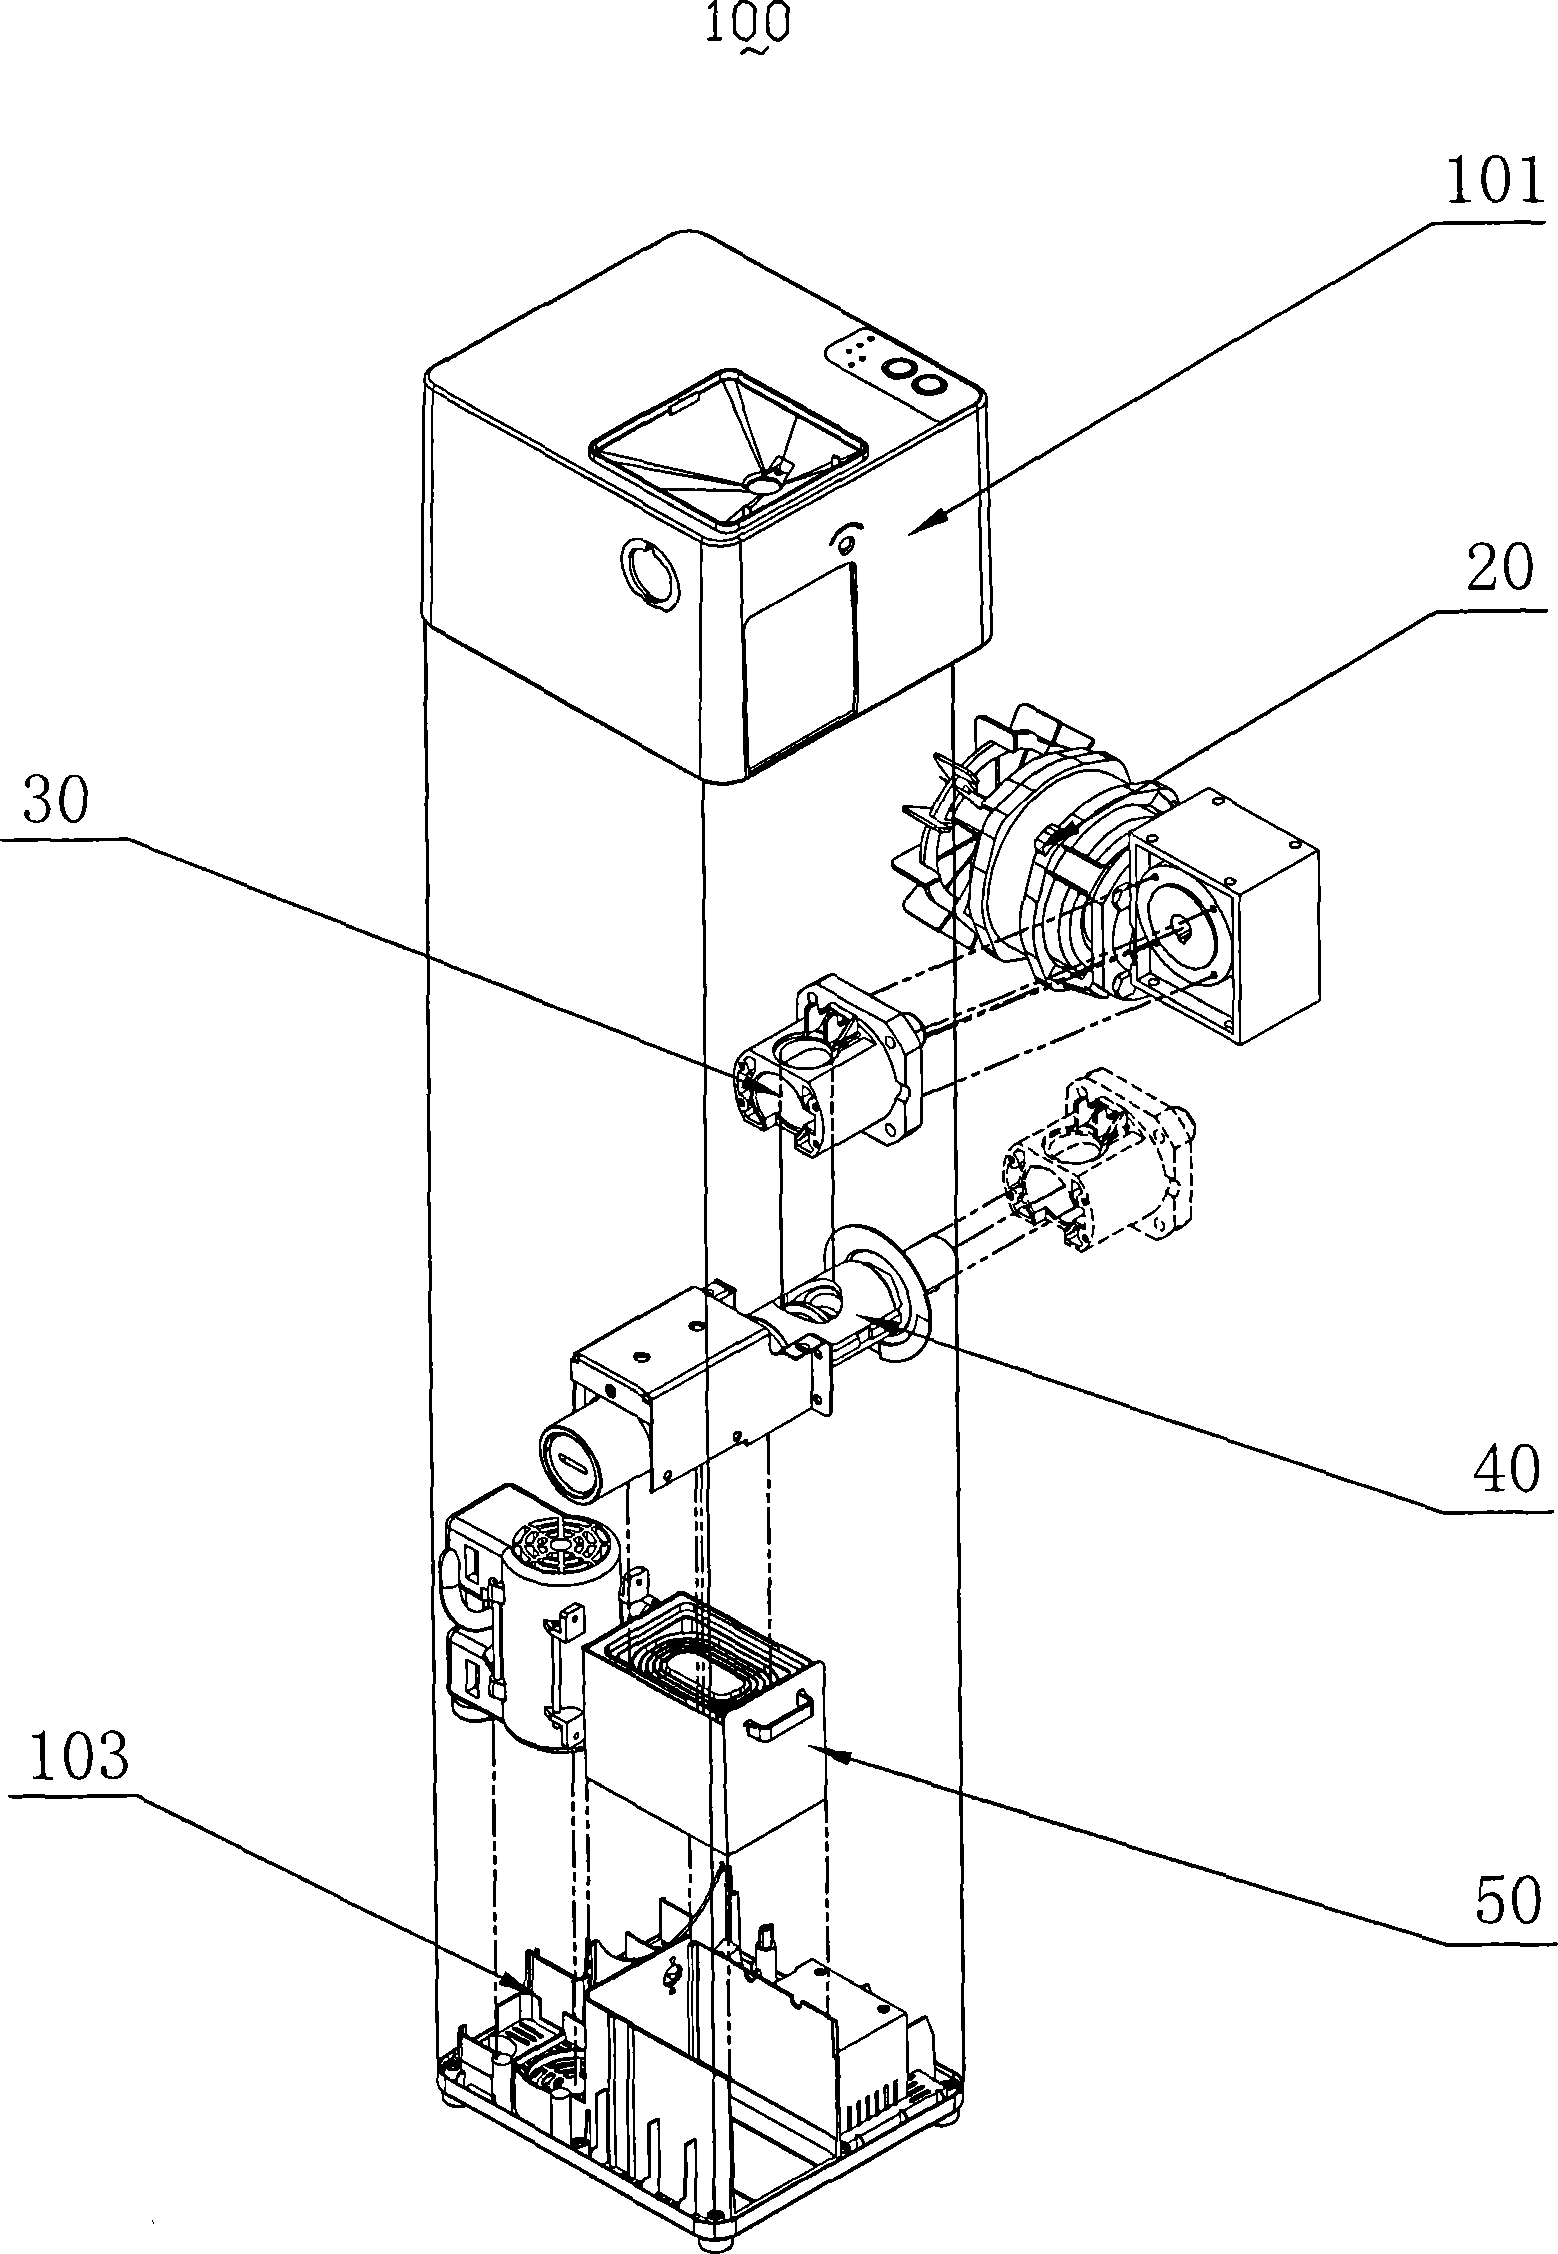 Domestic miniature oil press and oil pressing method